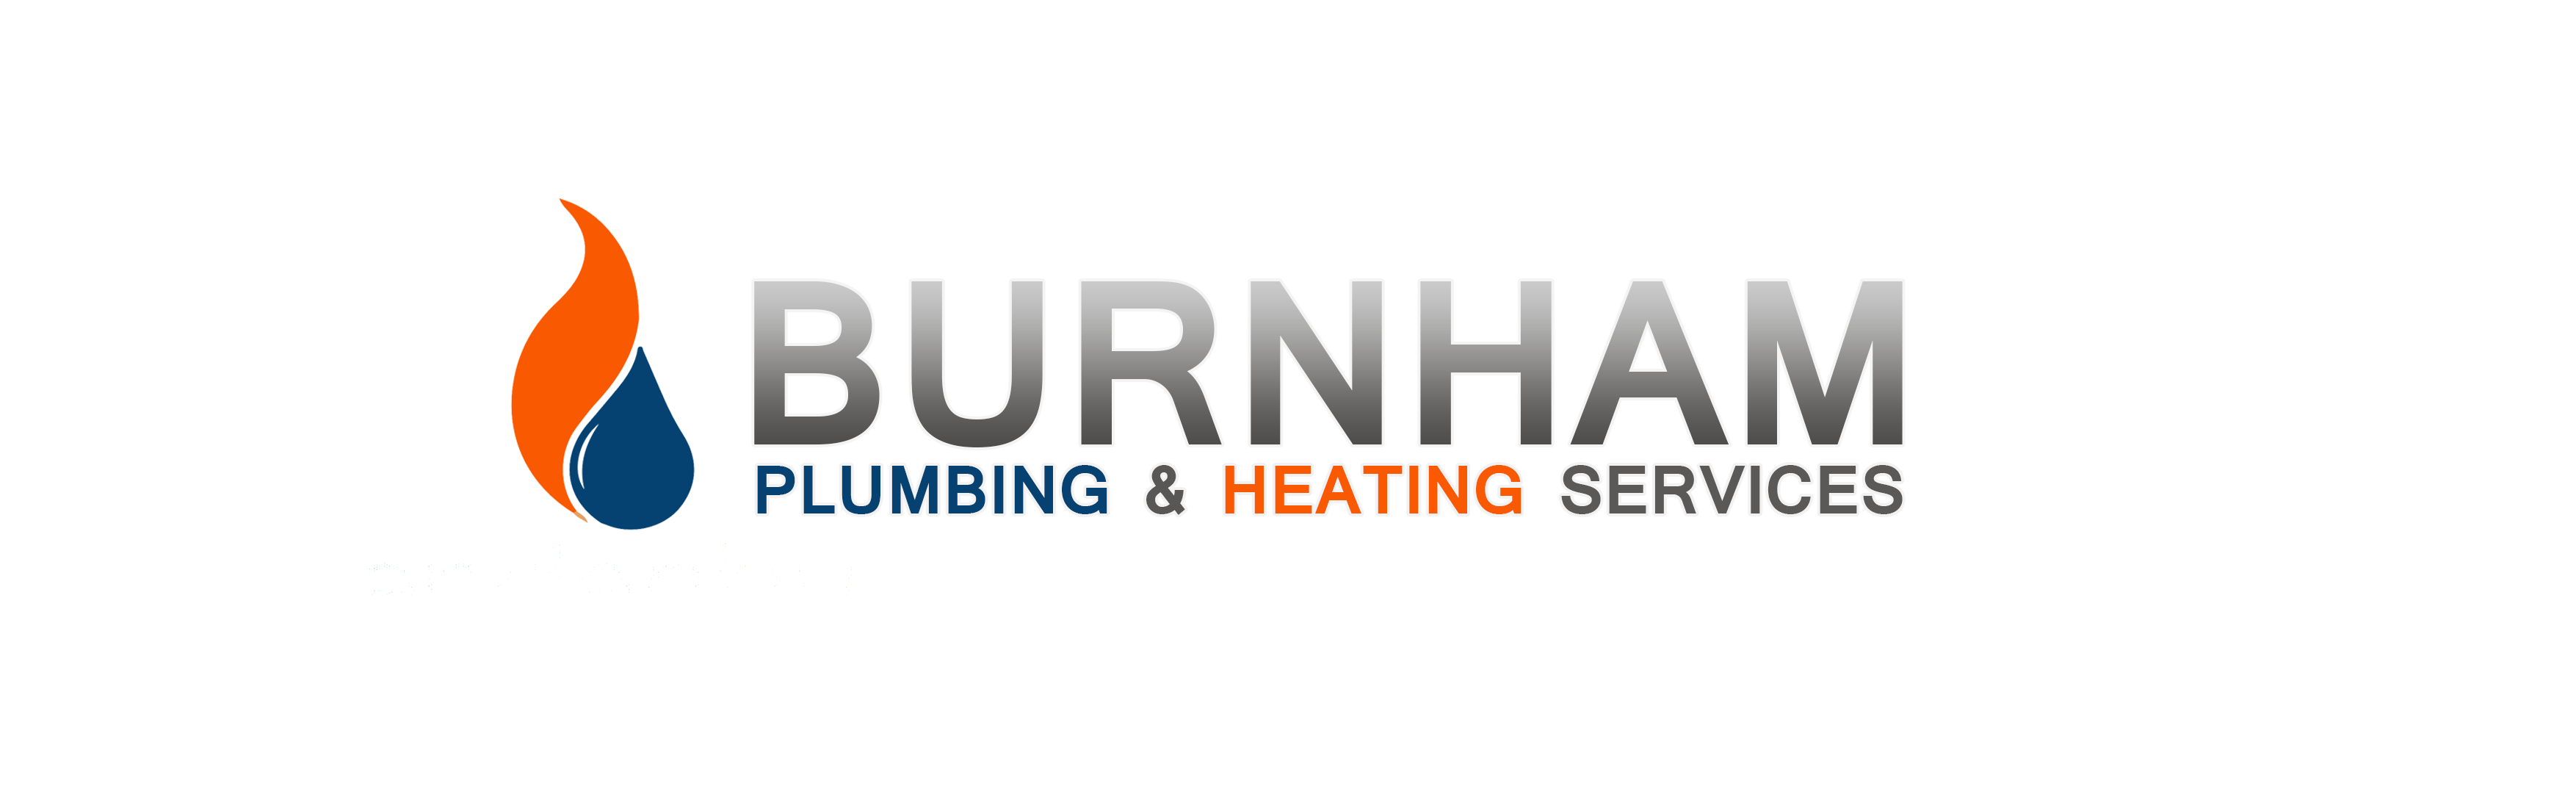 Burnham Boiler Logo - Burnham Plumbing & Heating Services. Boiler Installations, Central